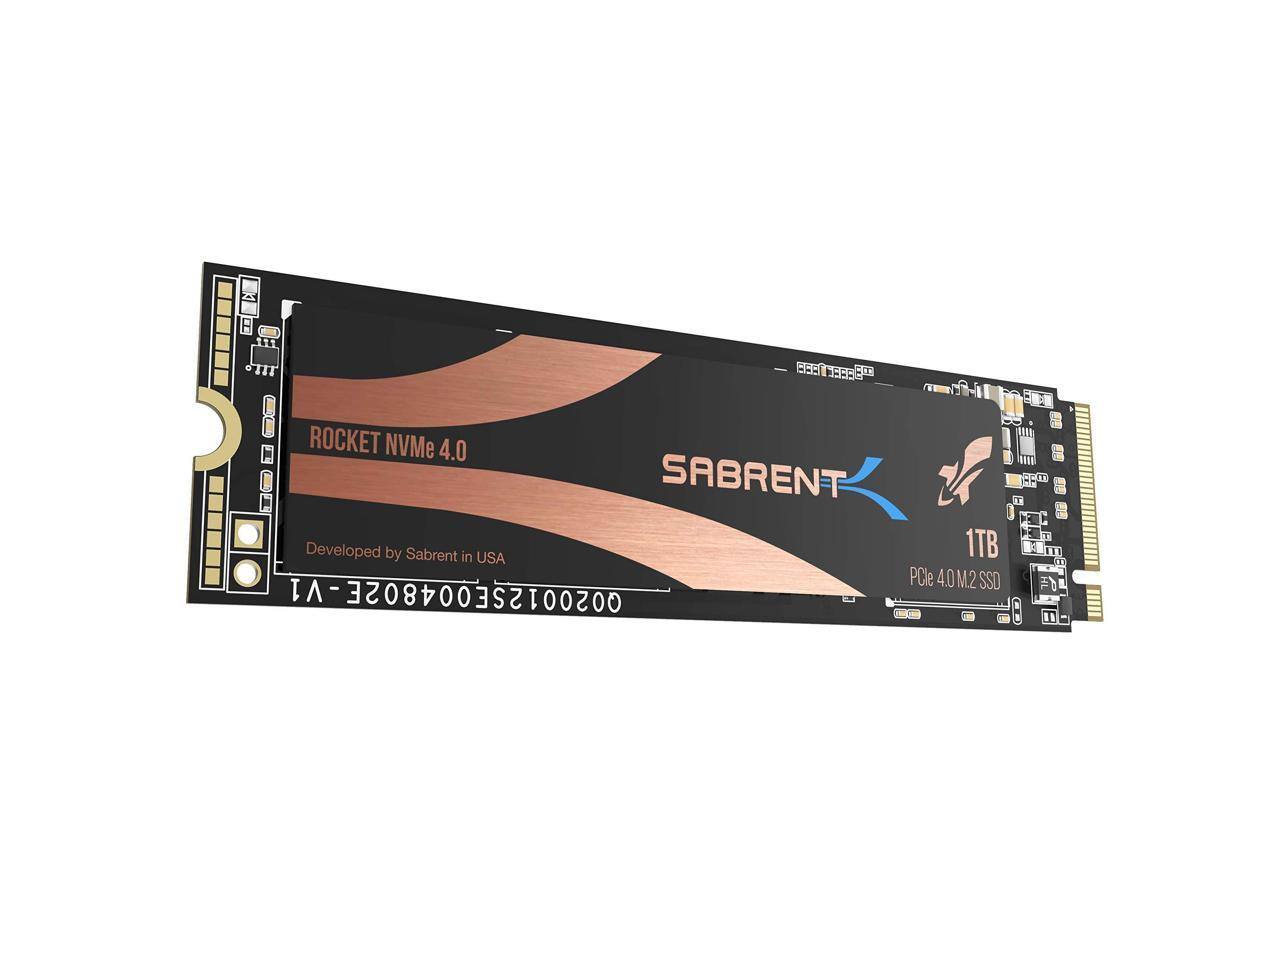 Sabrent 2TB Rocket Nvme PCIe 4.0 M.2 2280 Internal SSD Maximum Performance Solid State Drive (SB-ROCKET-NVMe4-2TB) - $297.49 & More